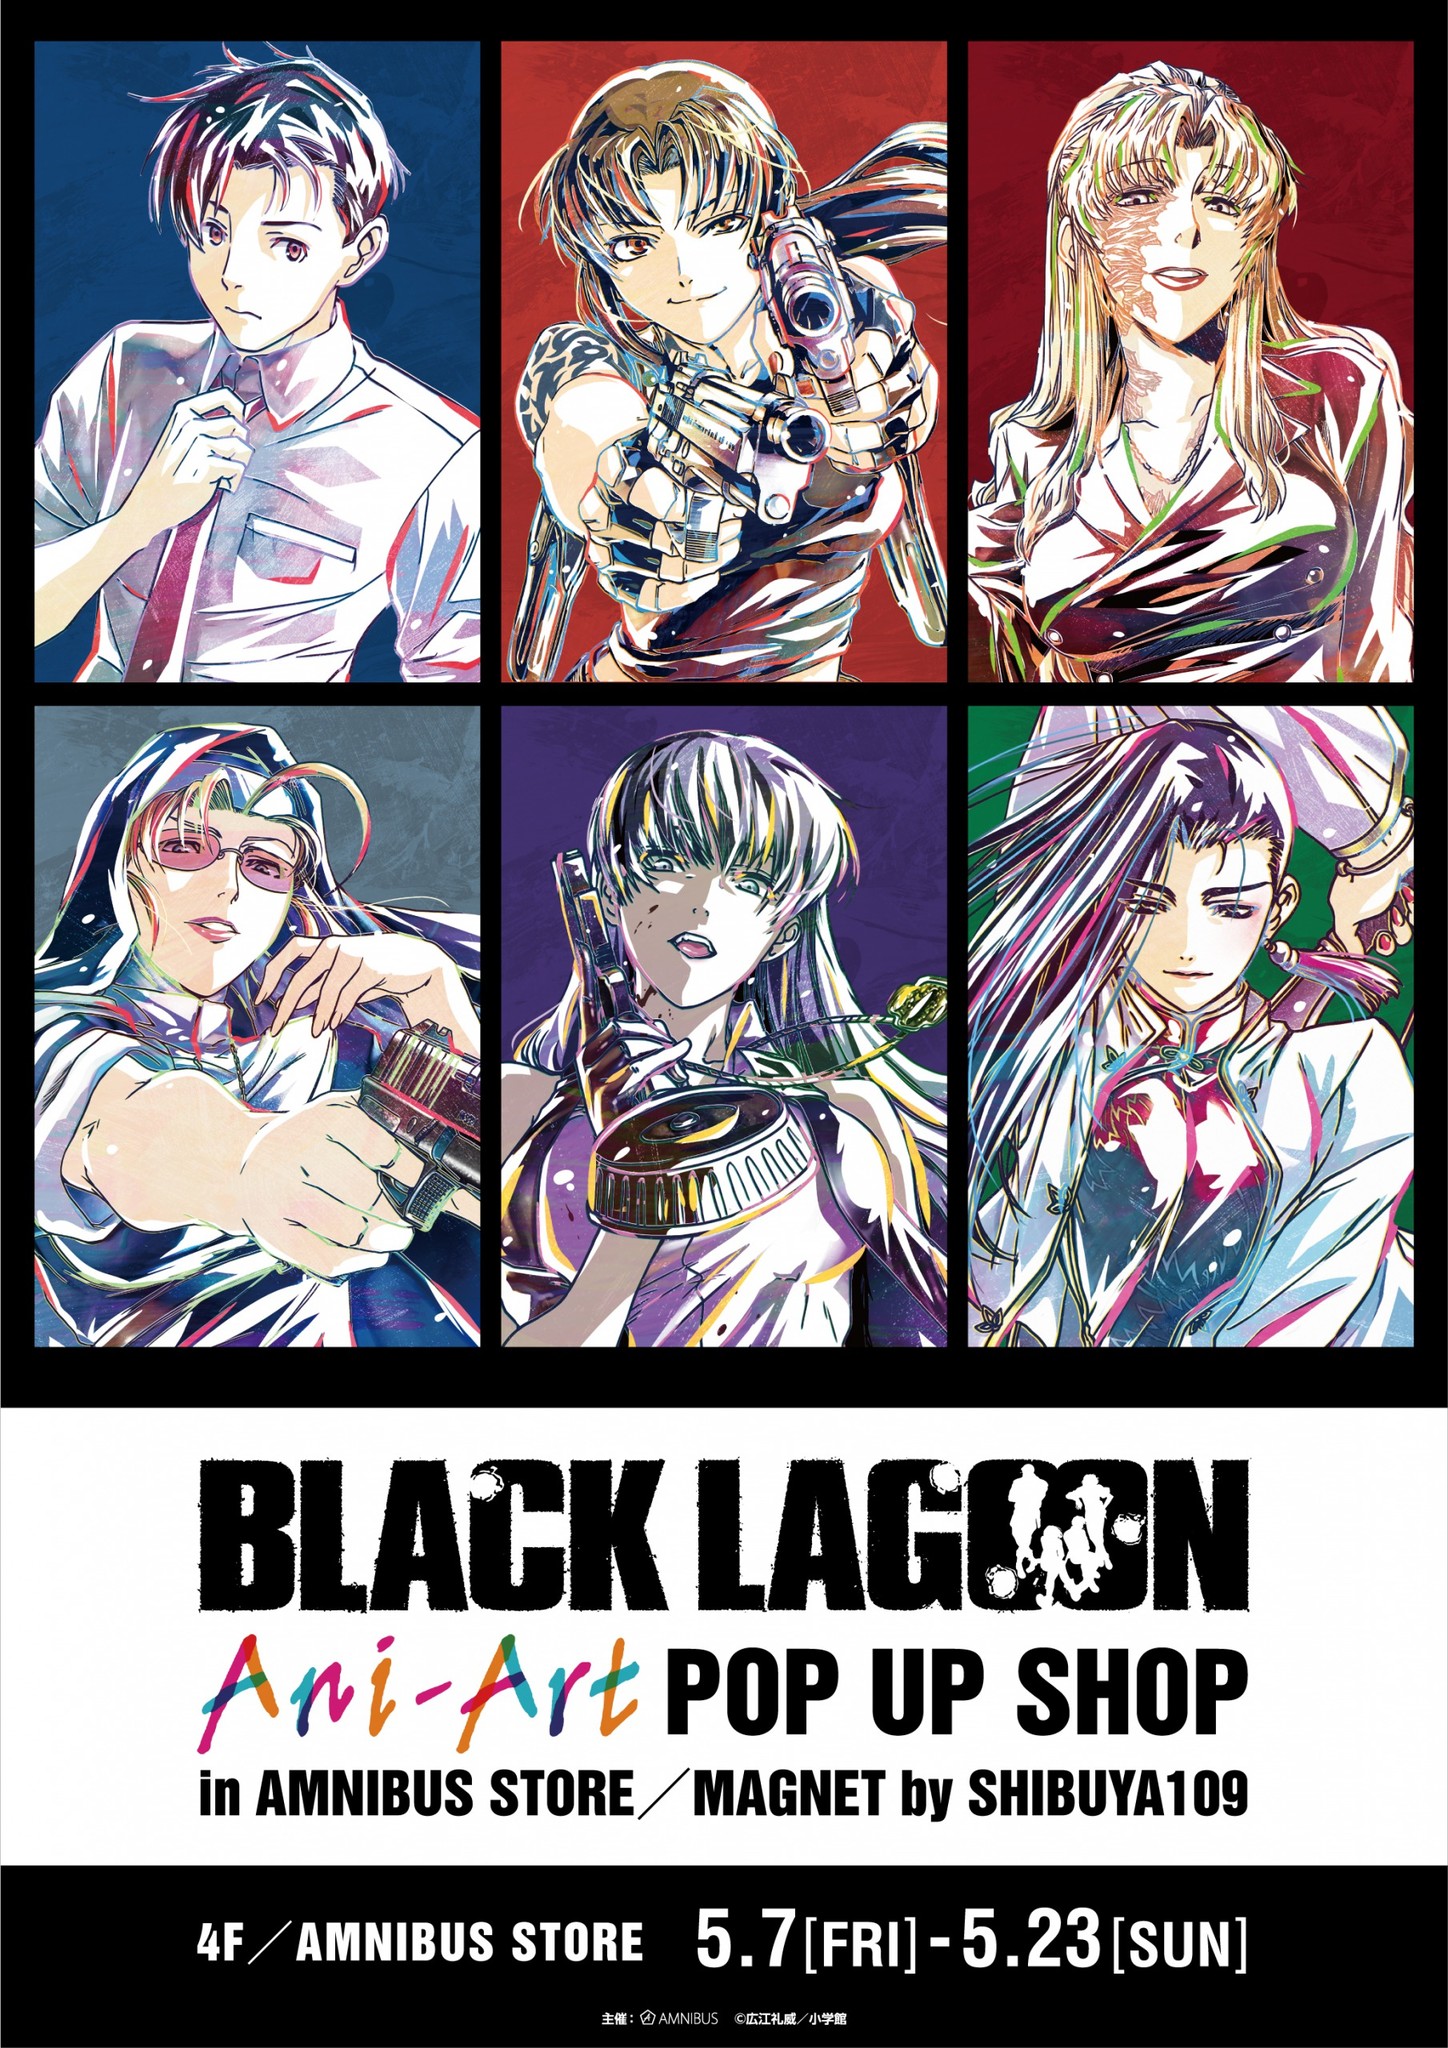 「BLACK LAGOON Ani-Art POP UP SHOP in AMNIBUS STORE 